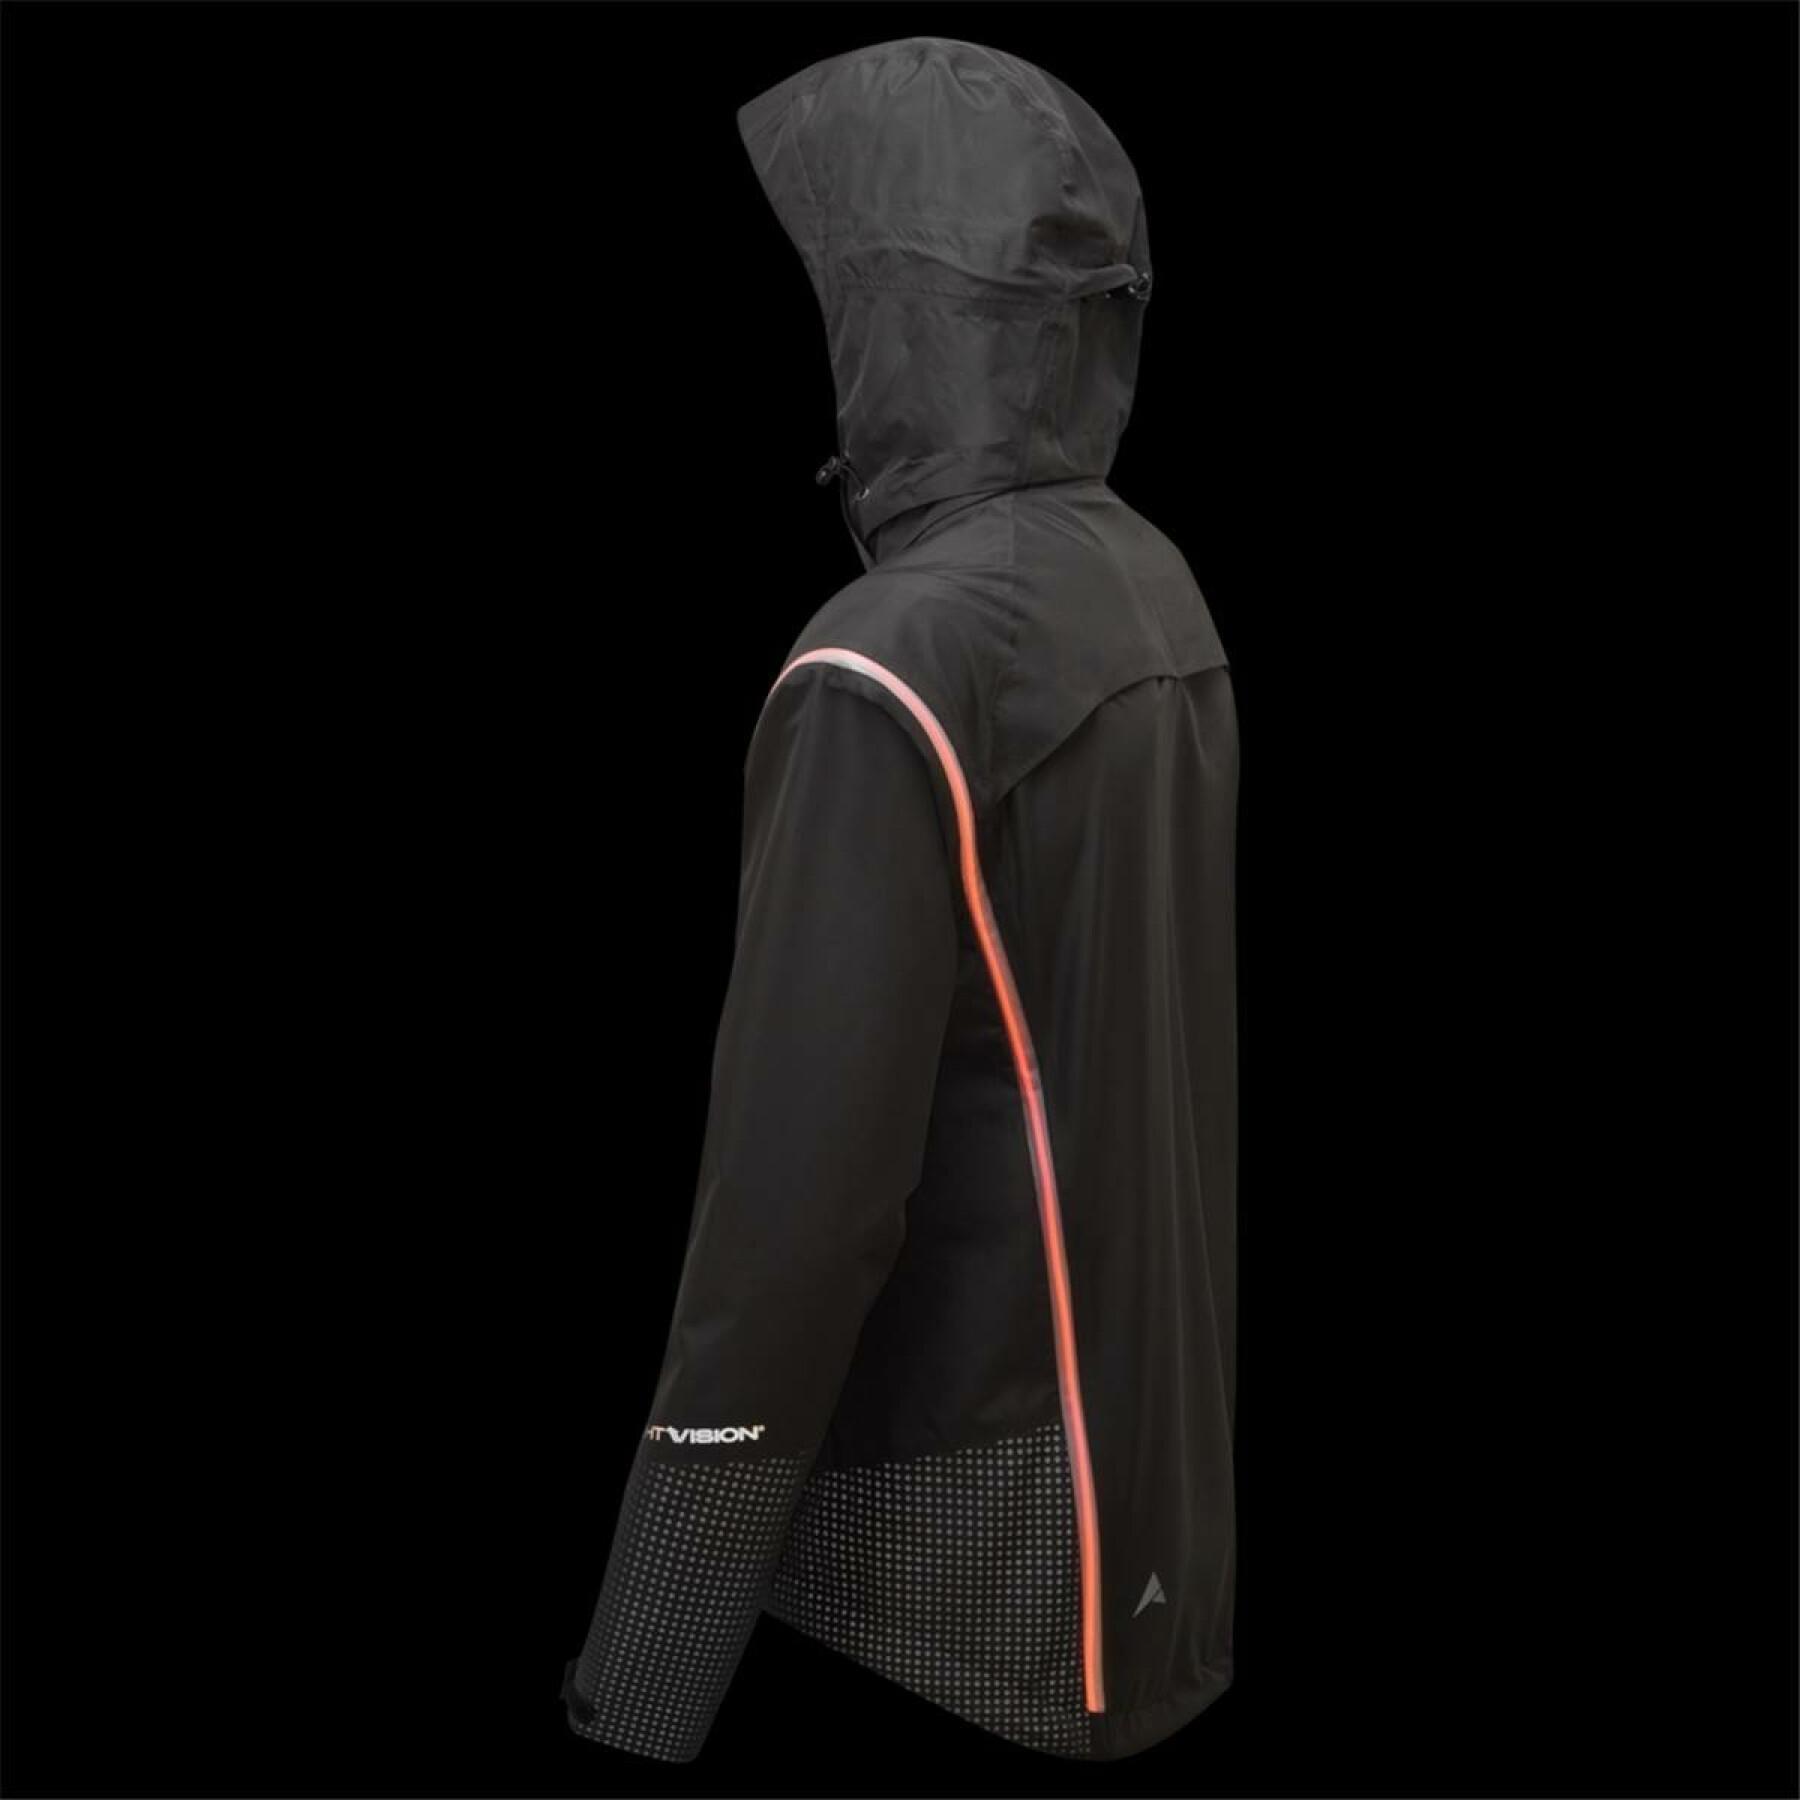 Waterproof jacket Altura Electron Nightvision